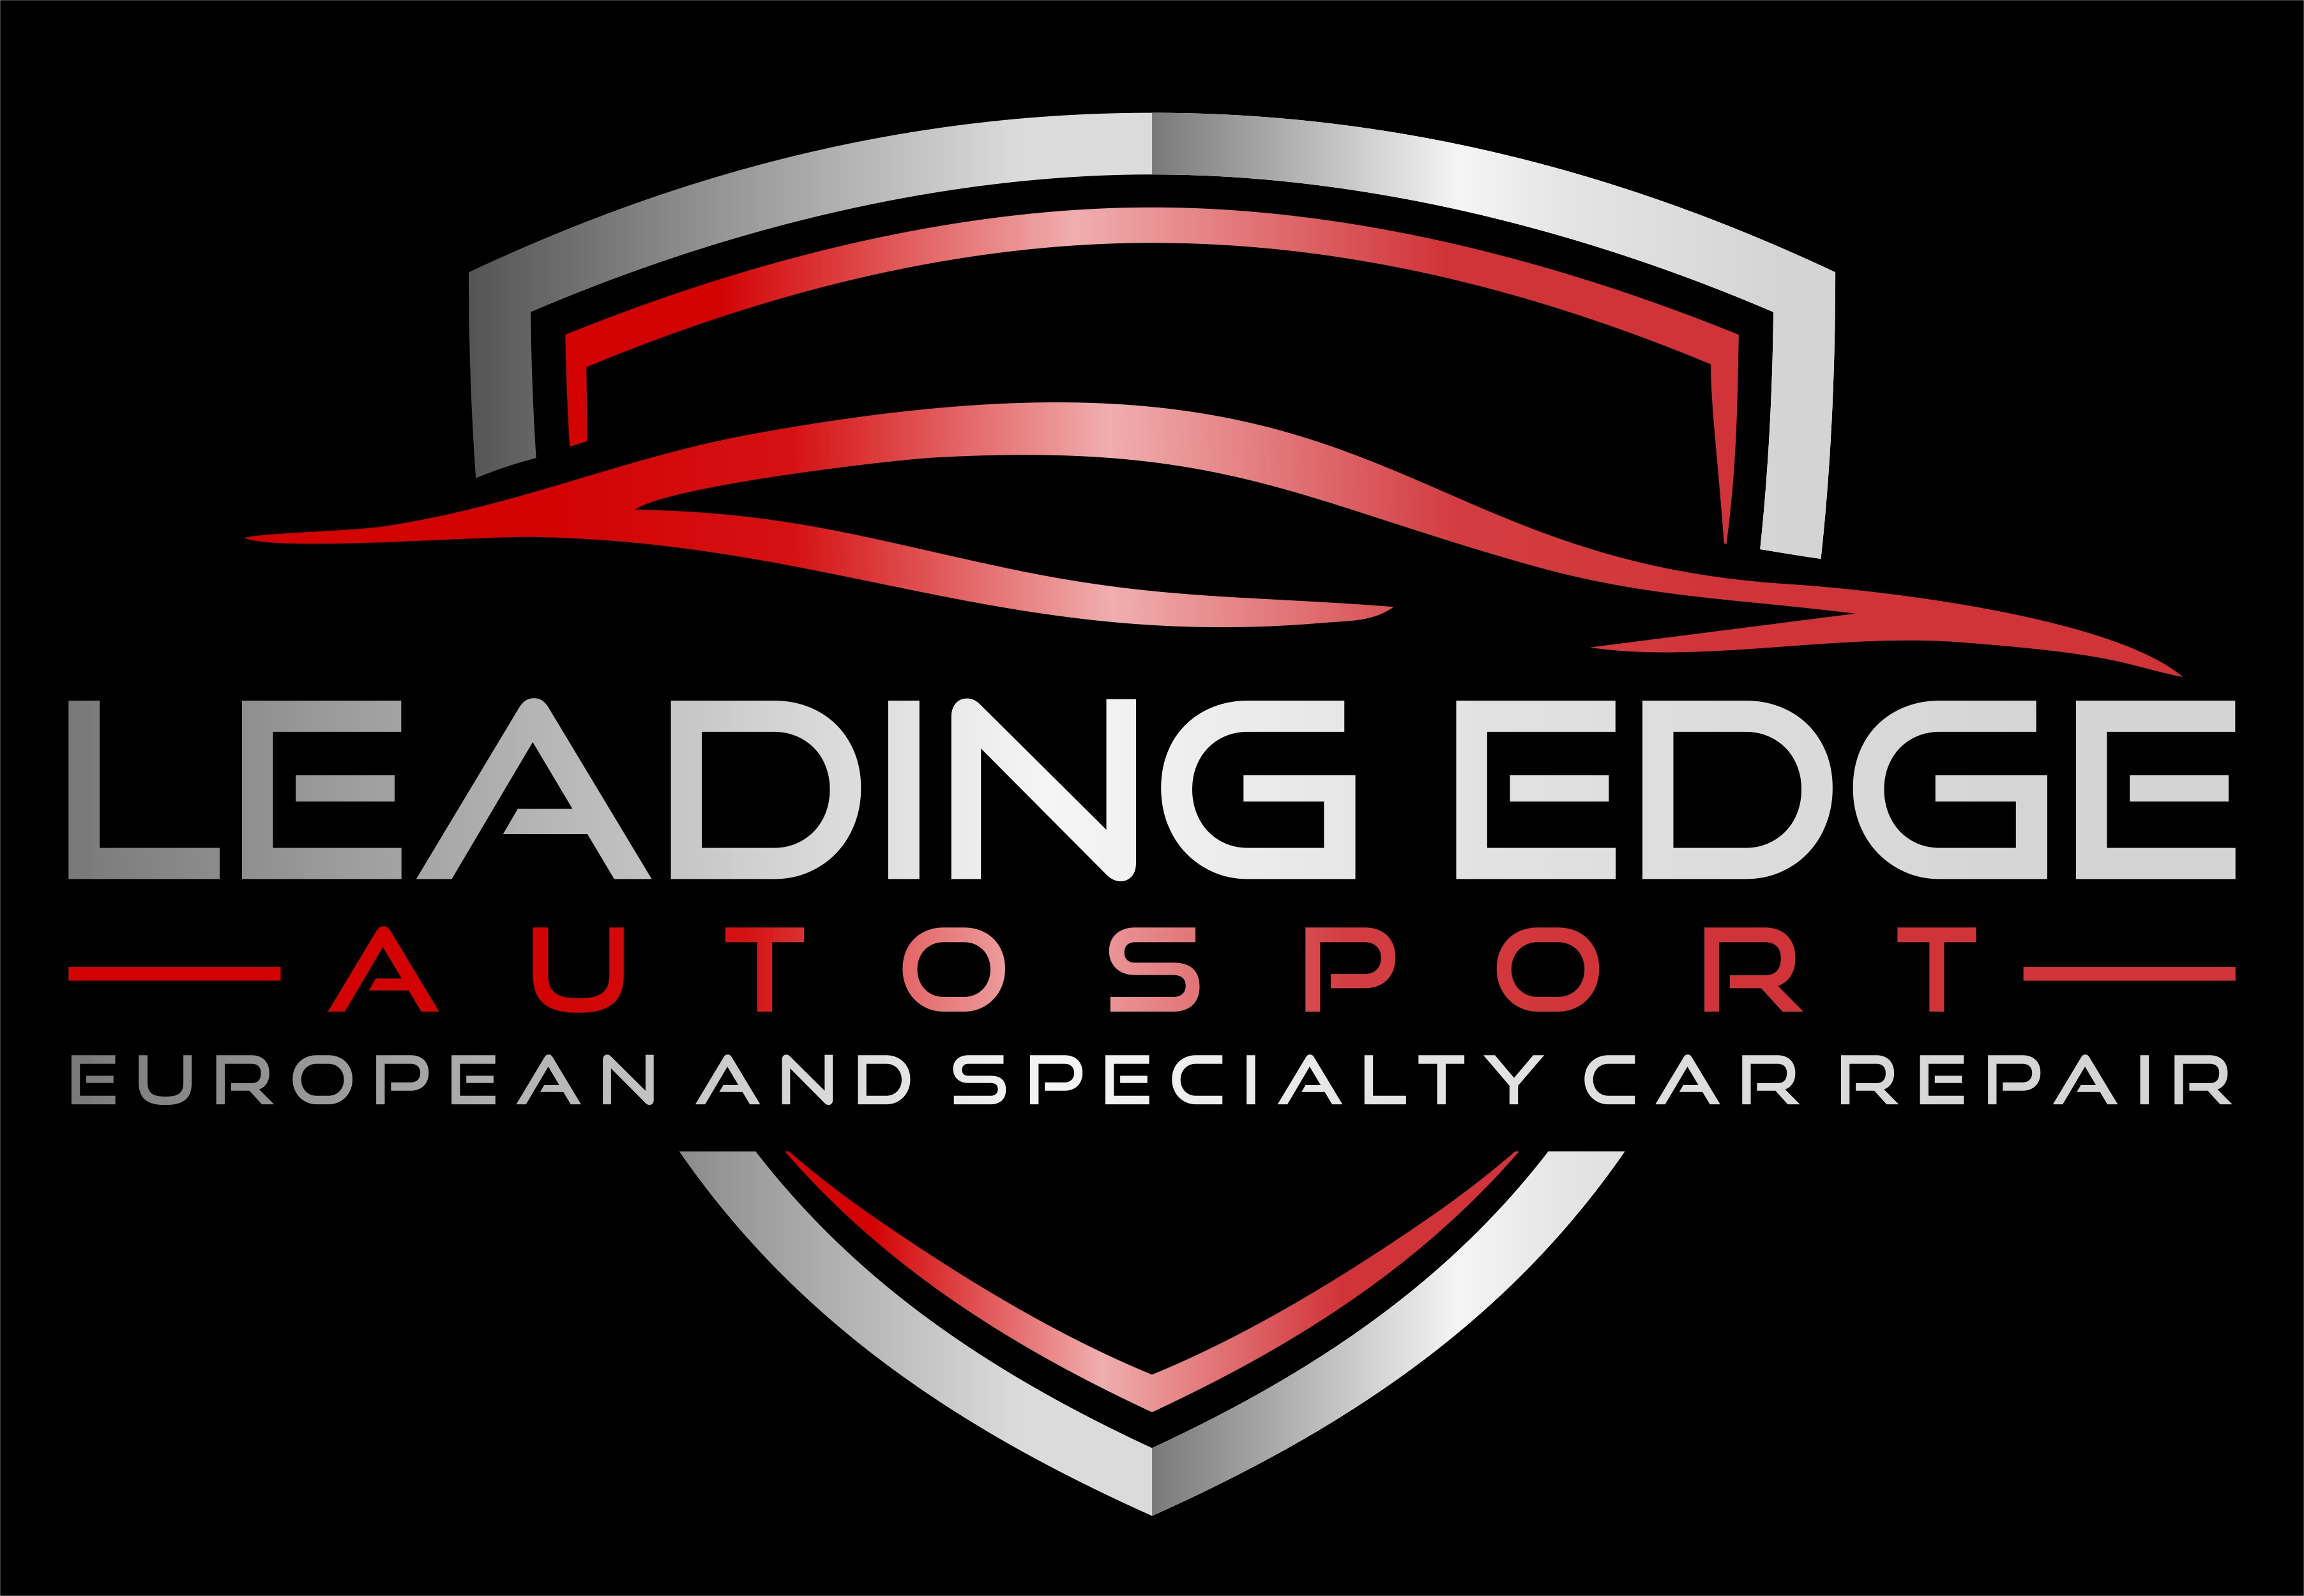 Leading Edge Autosport